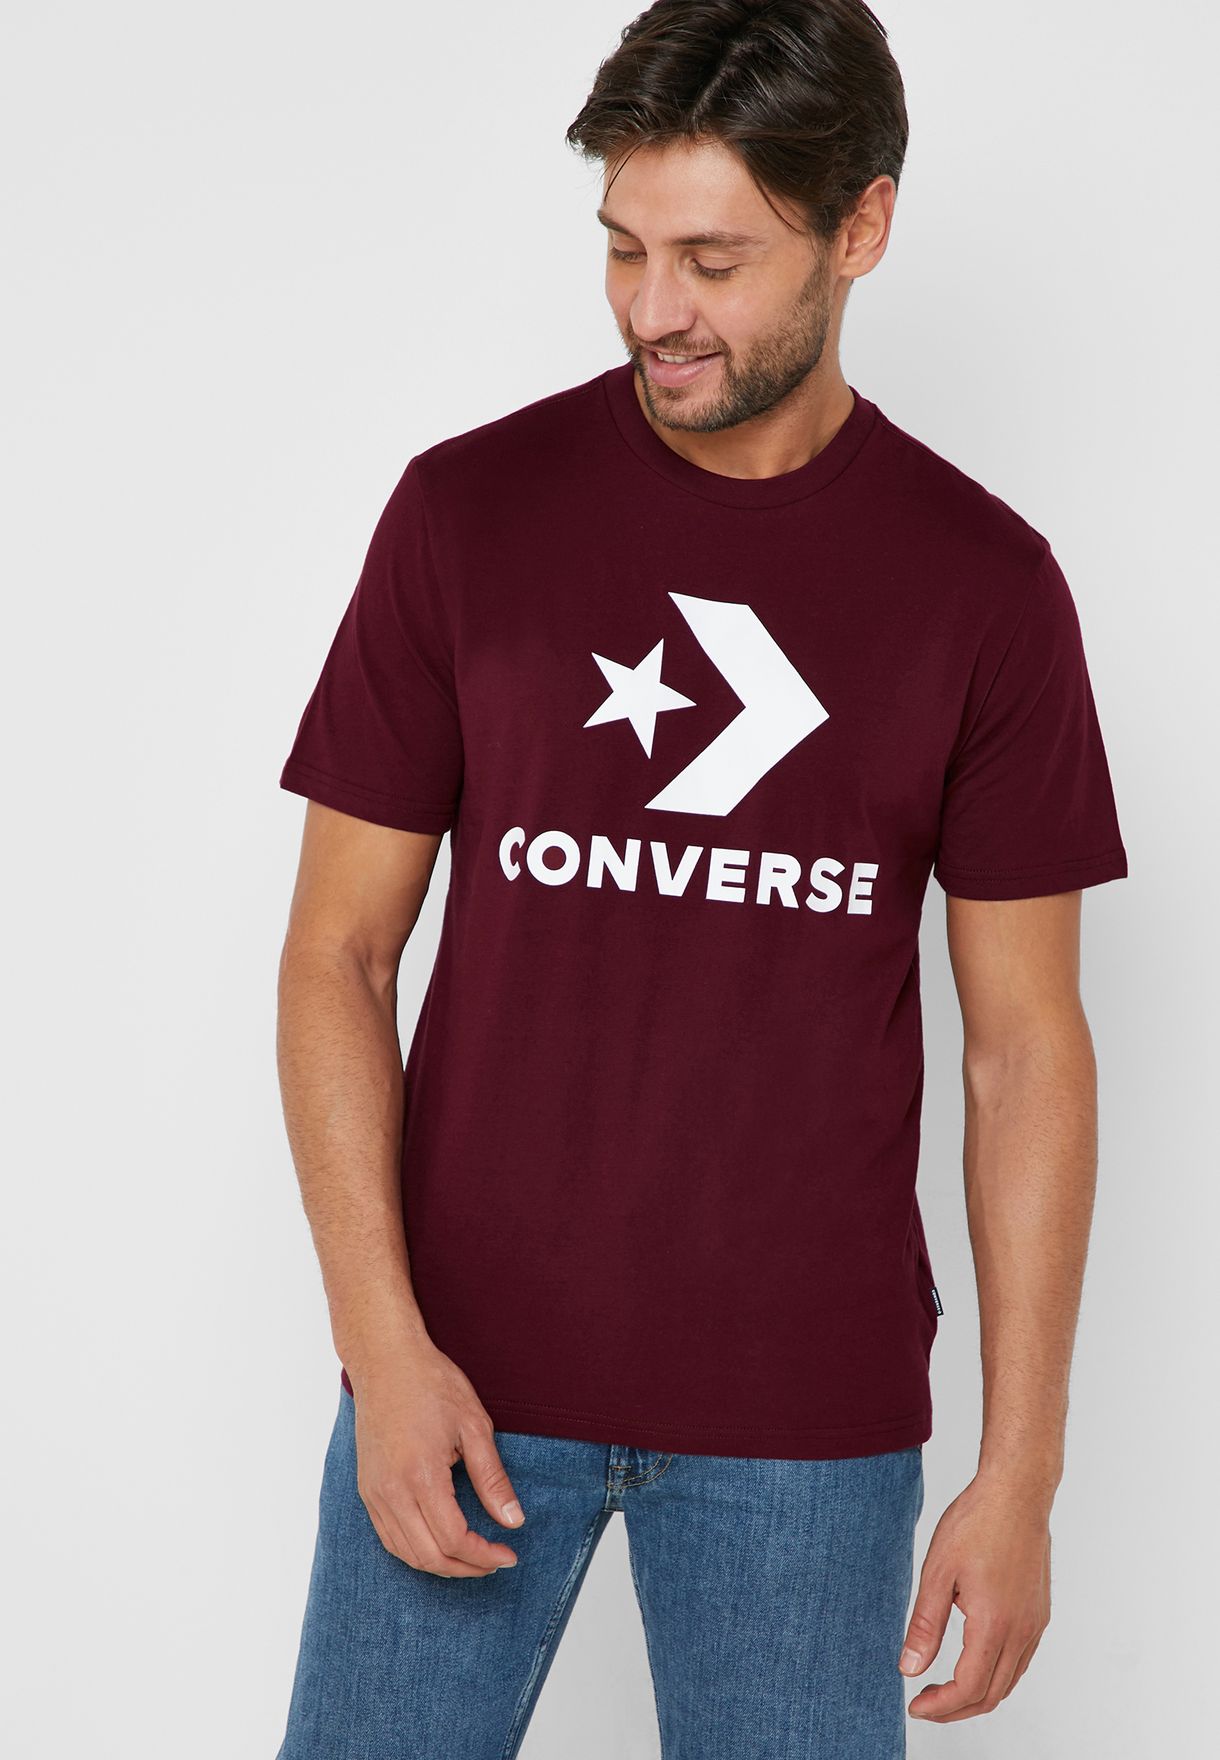 burgundy converse t shirt